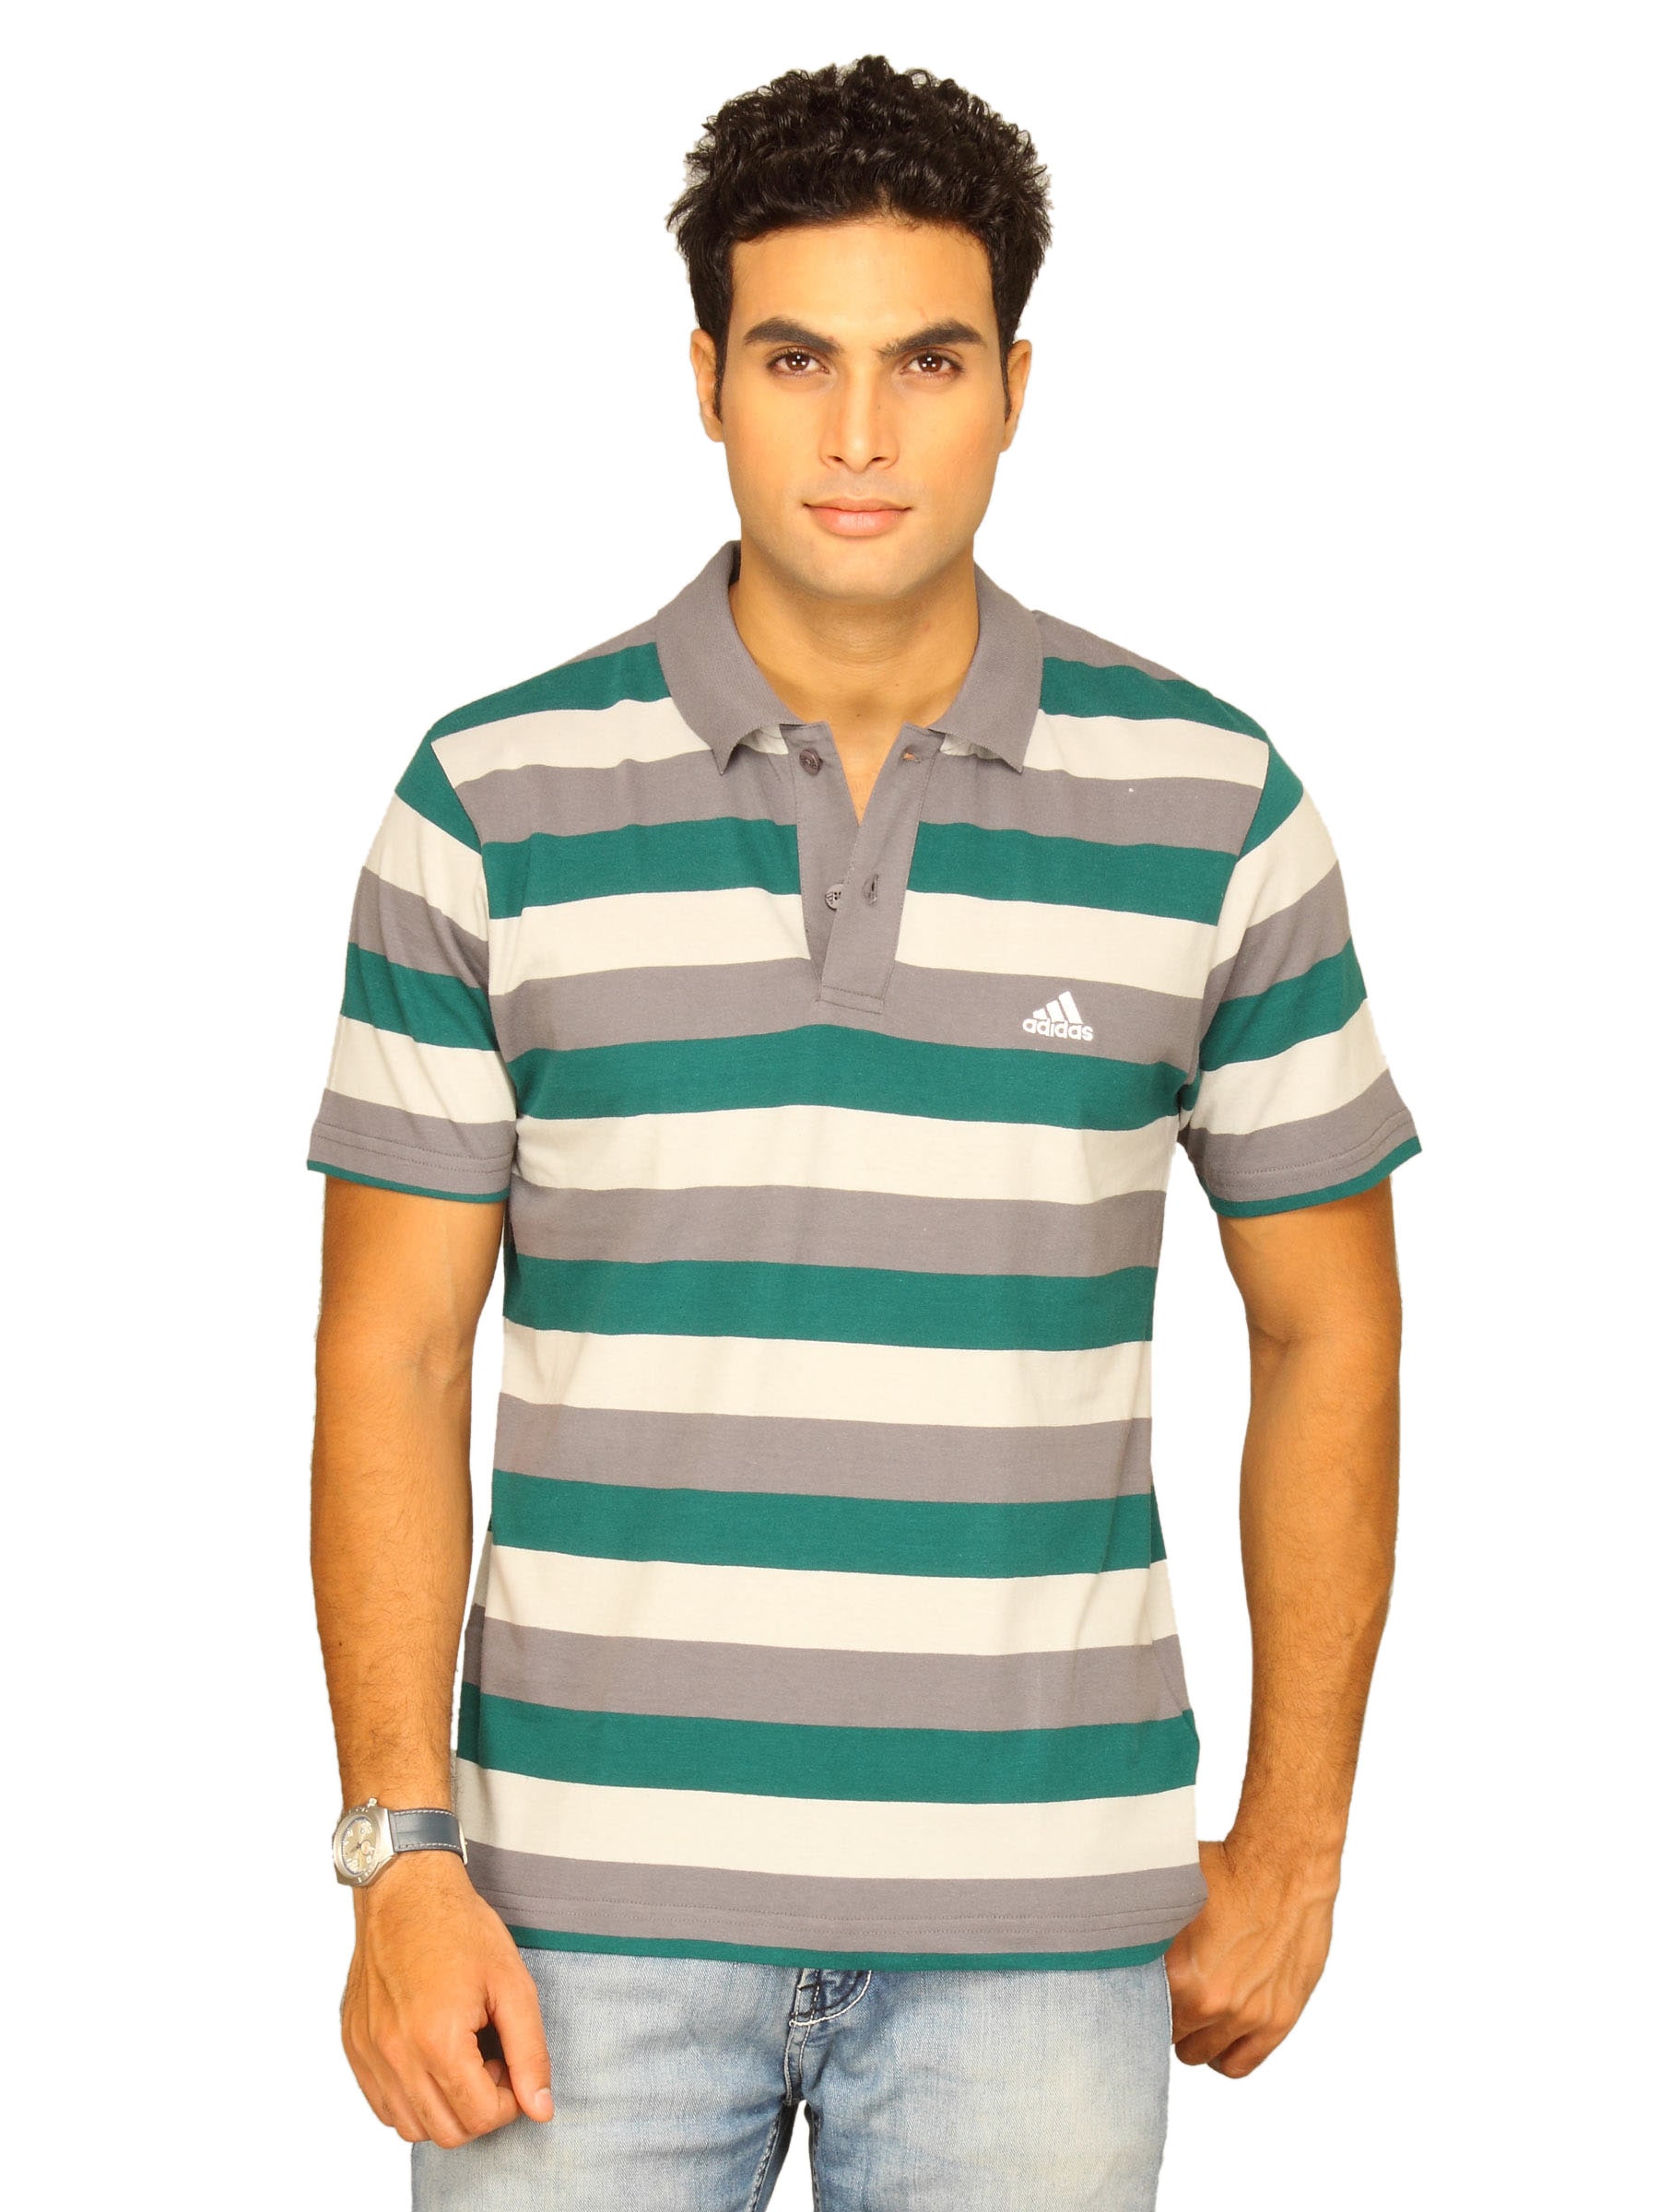 ADIDAS Men's Stripe Polo Green Grey T-shirt